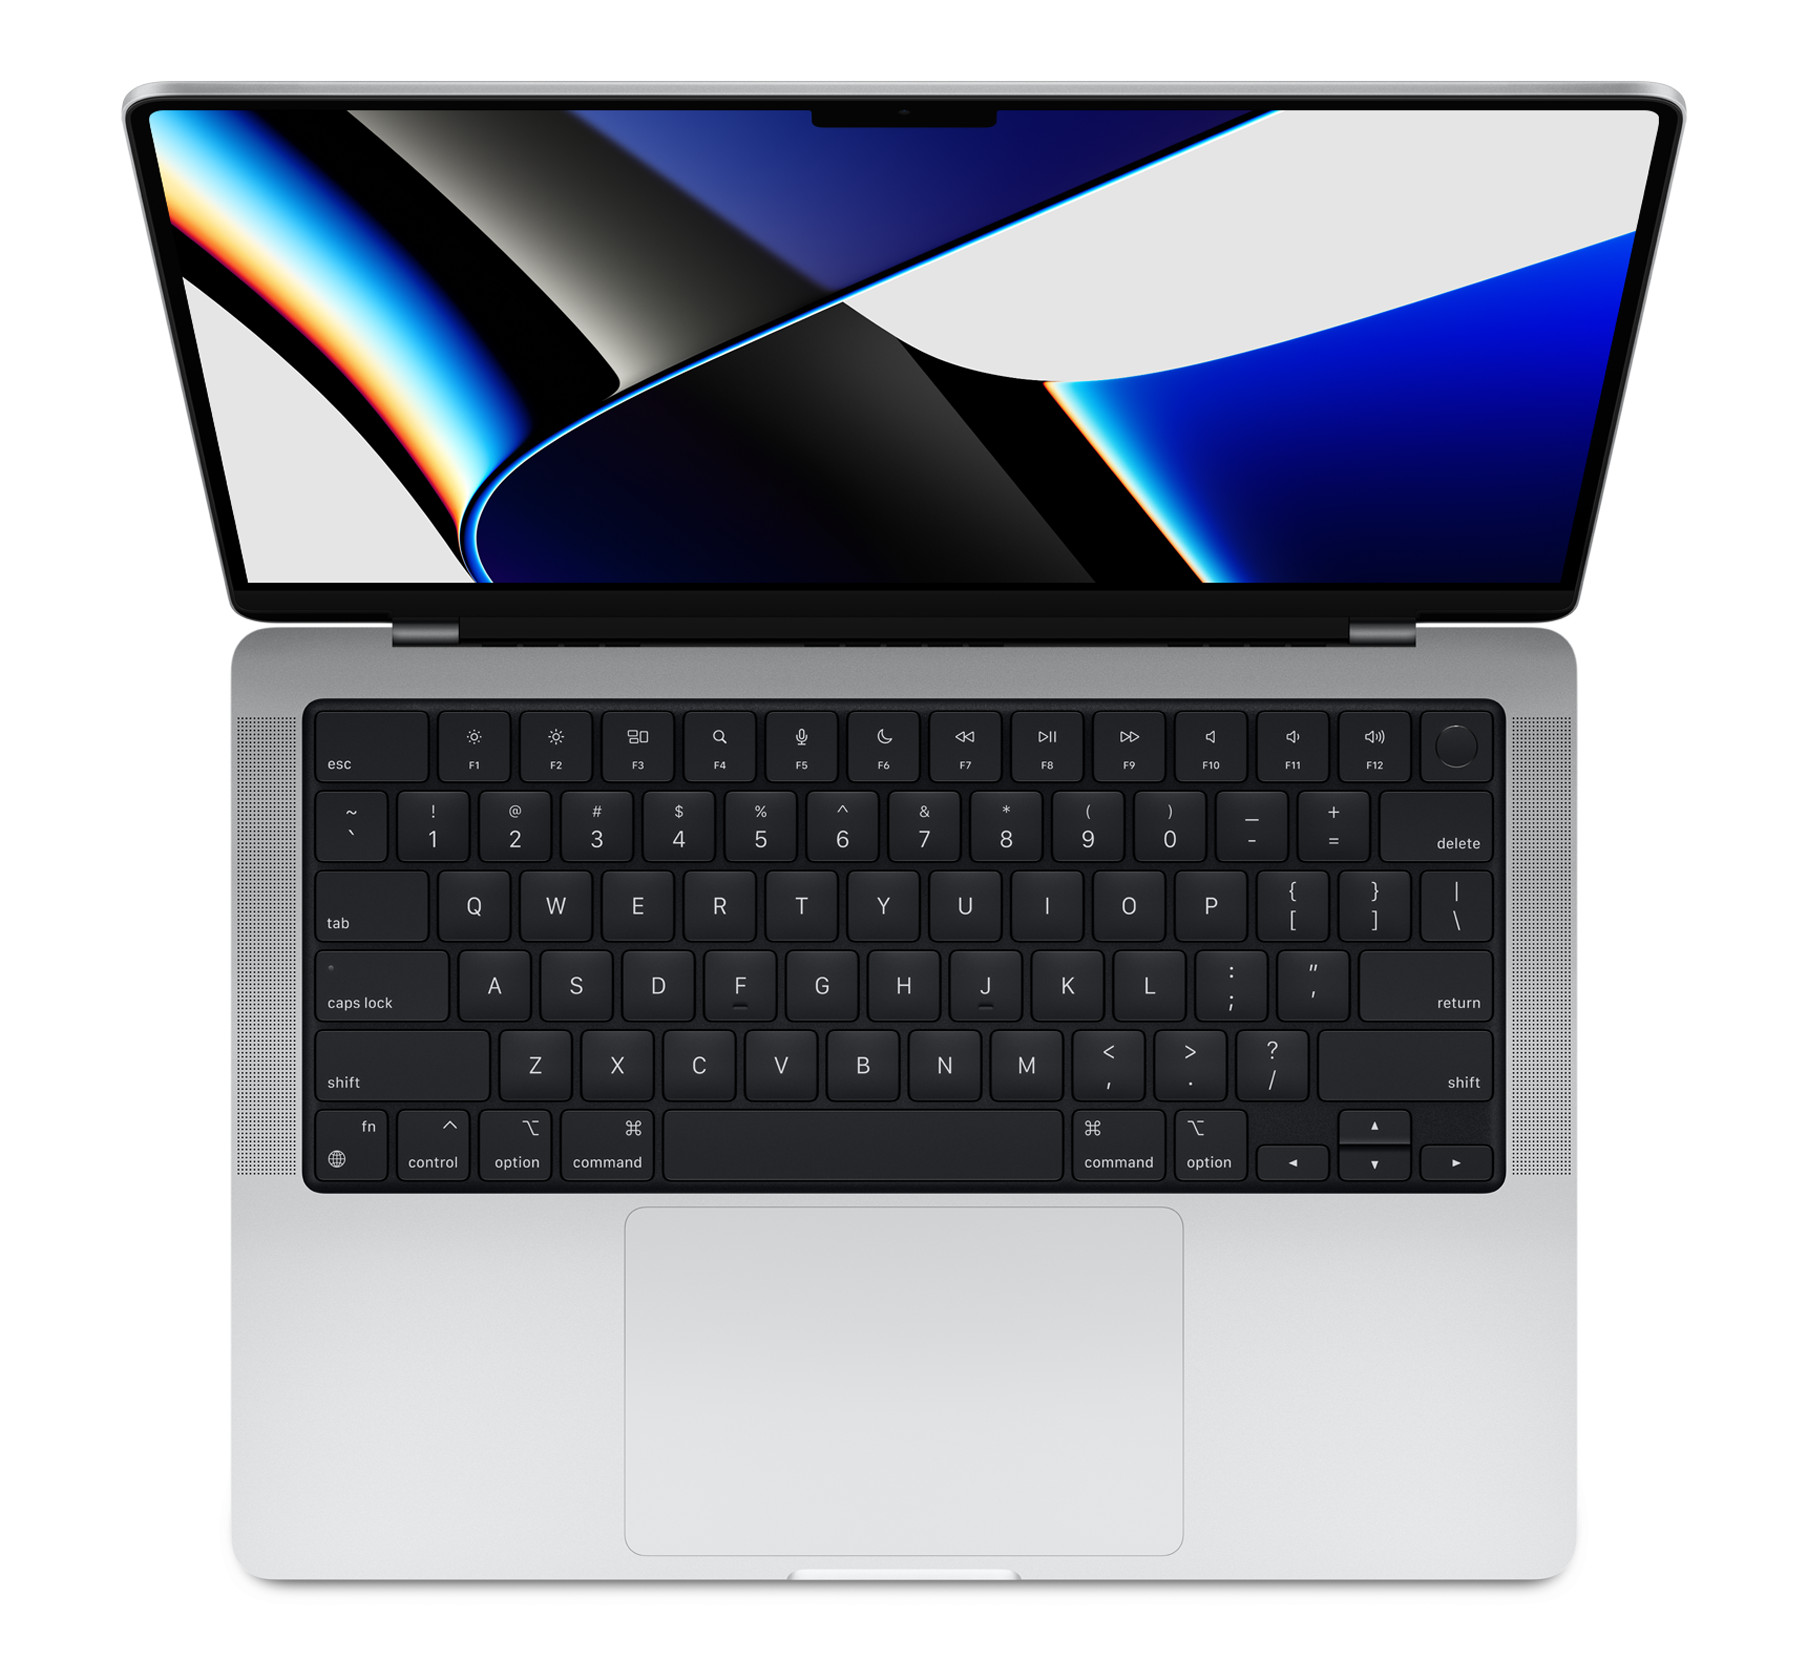 MacBook Pro 2021 14インチ M1 Pro  32GB 1TB